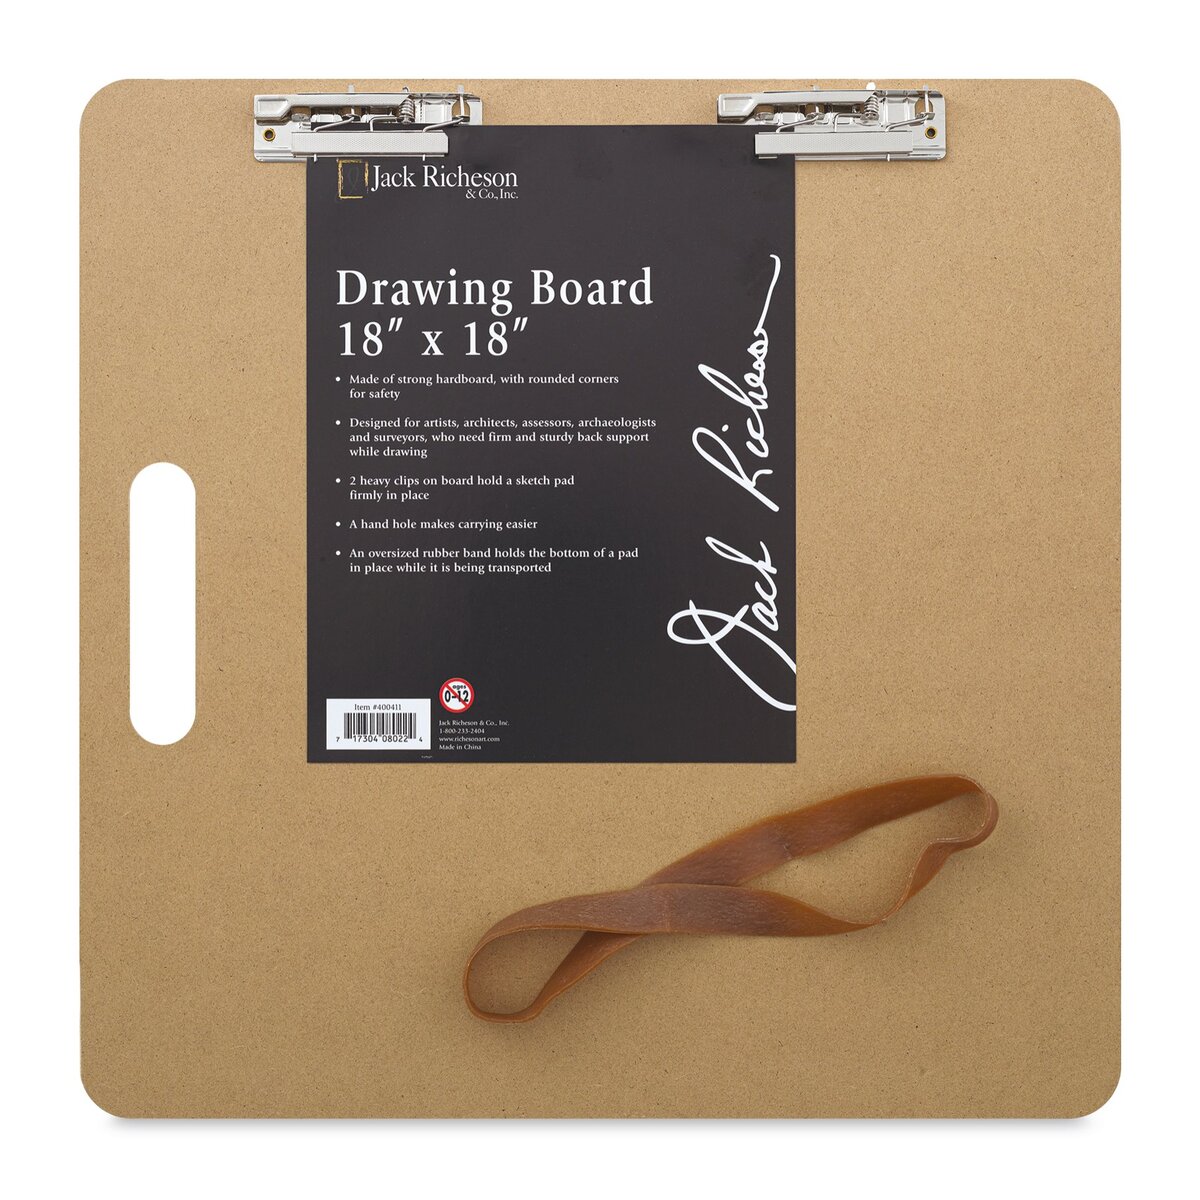 Khyati Sales - How to use Drawing Board Clips? #KhyatiIndia #Stationery  #DrawingBoardClips #EngineeringDrawing #DrawingBoard #DrawingSheet |  Facebook